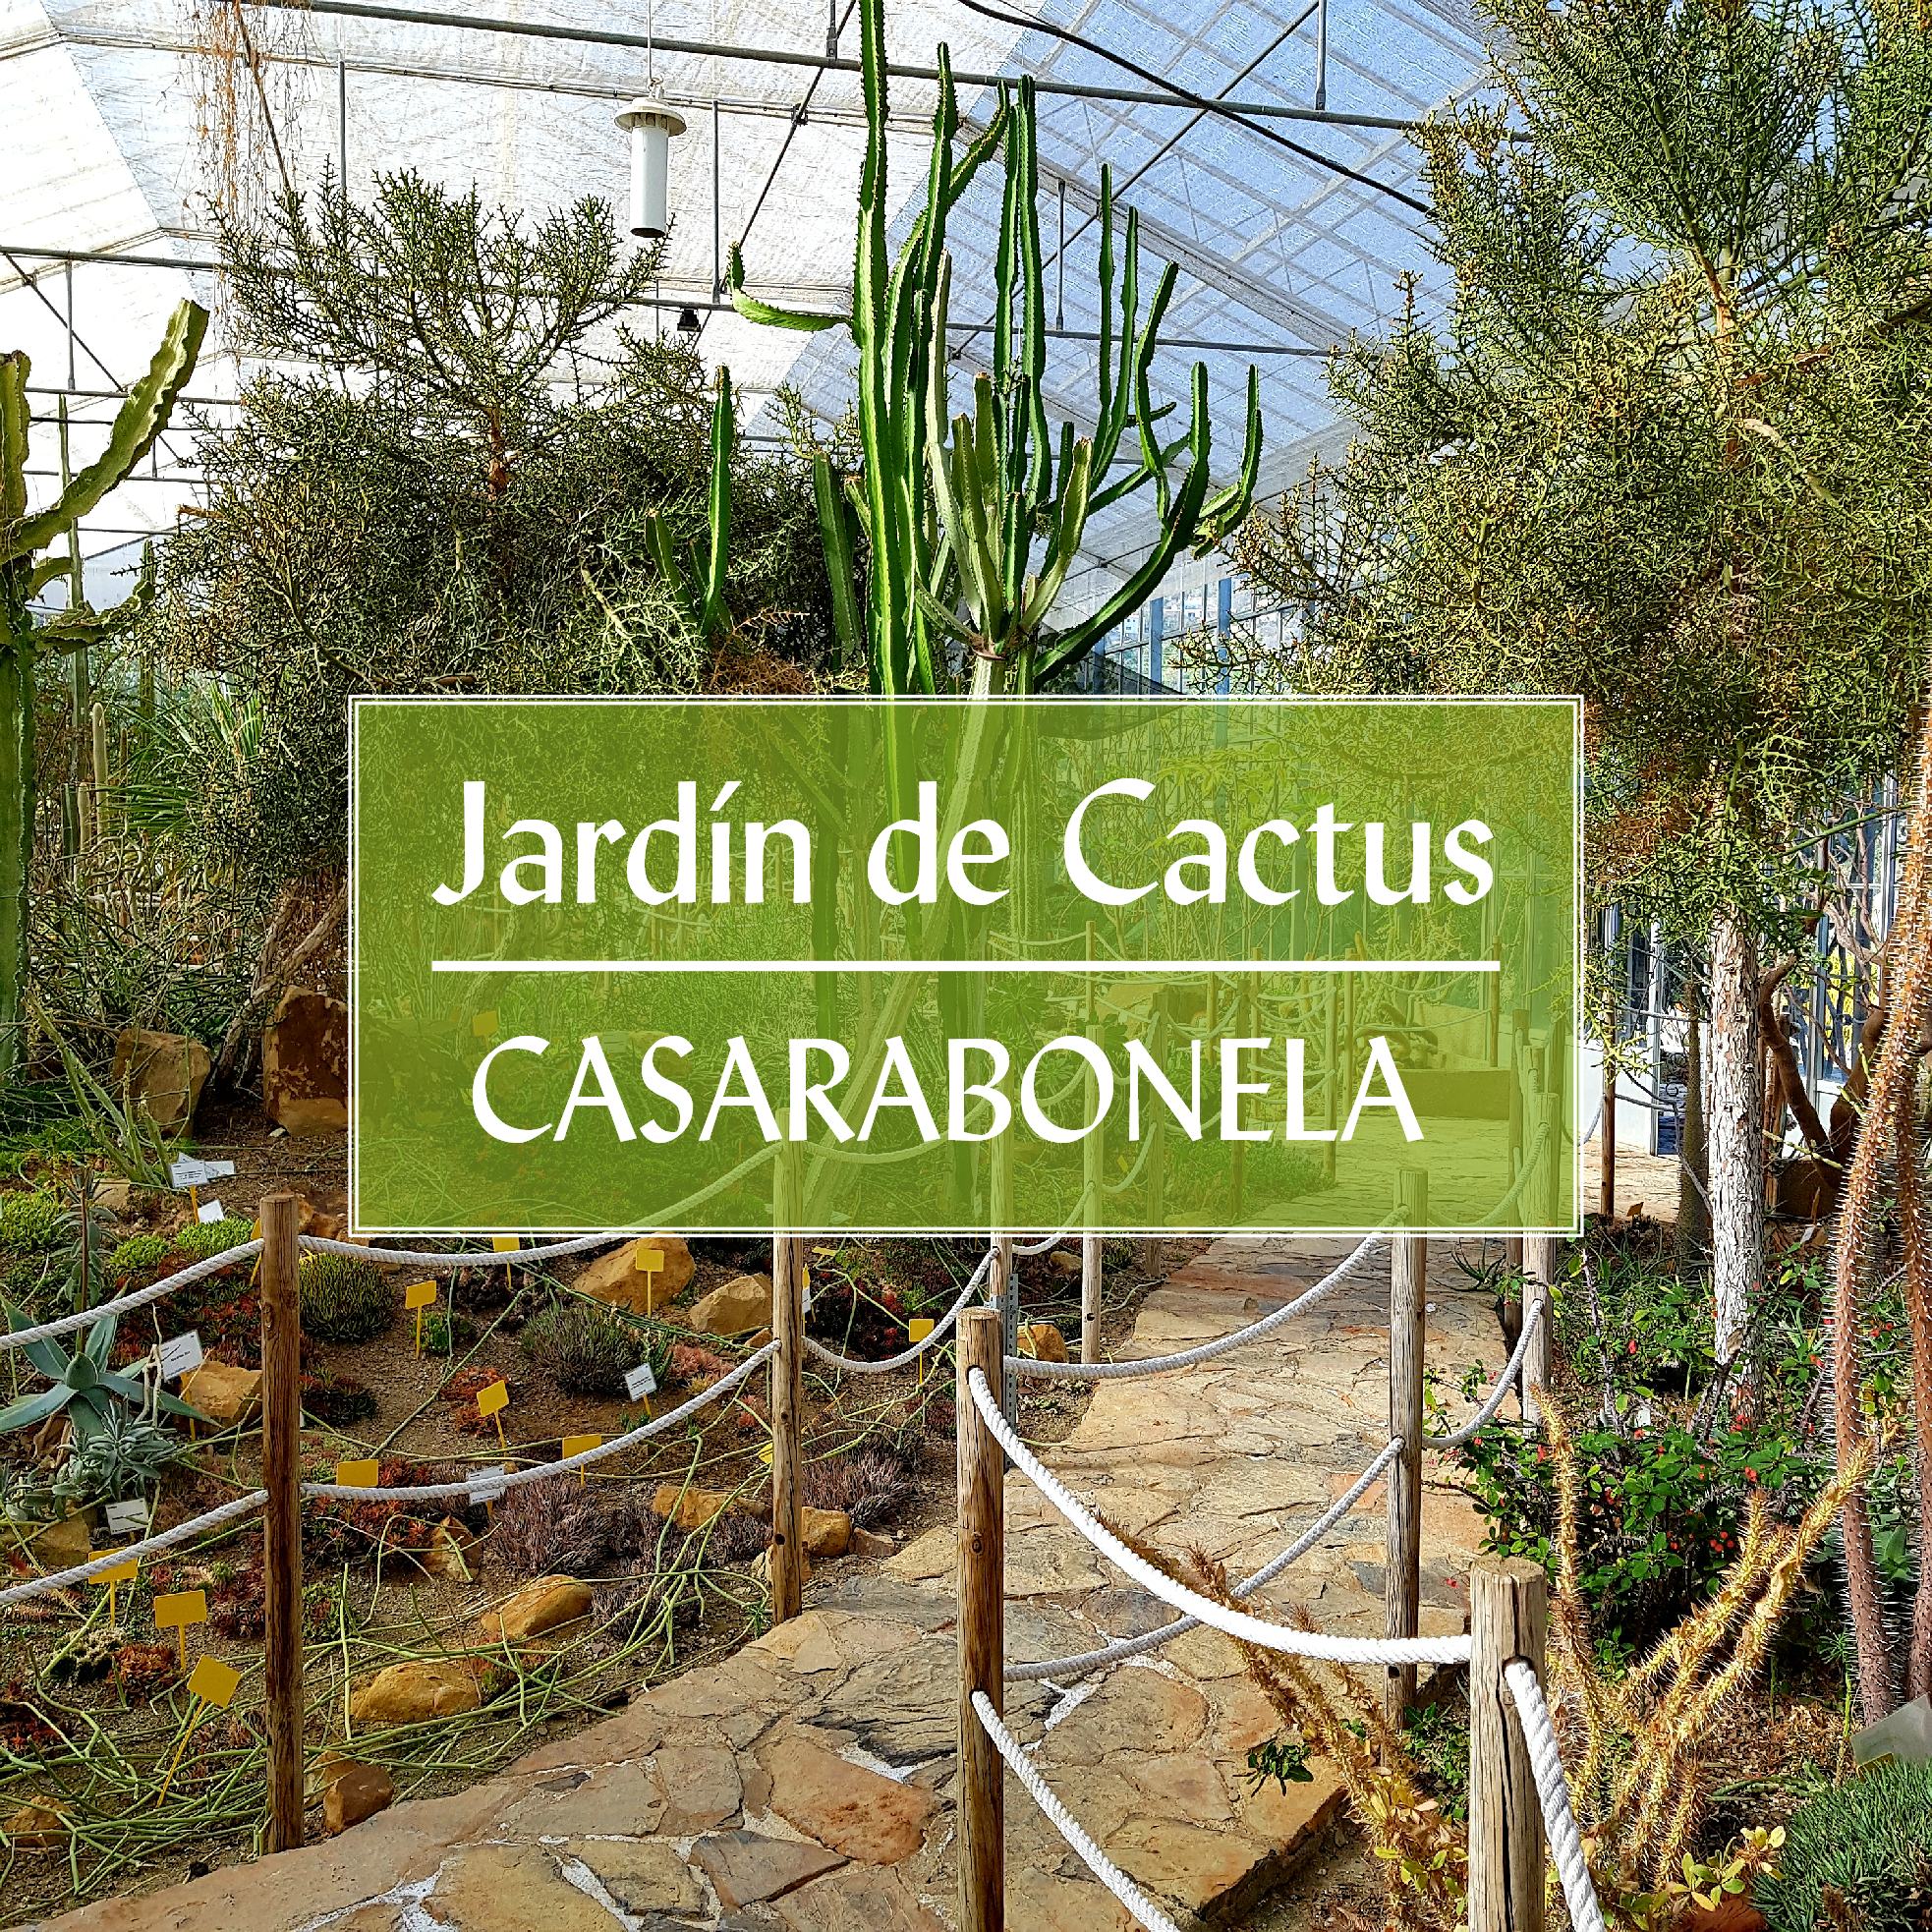 Jardin Botanico de Cactus Casarabonela Malaga